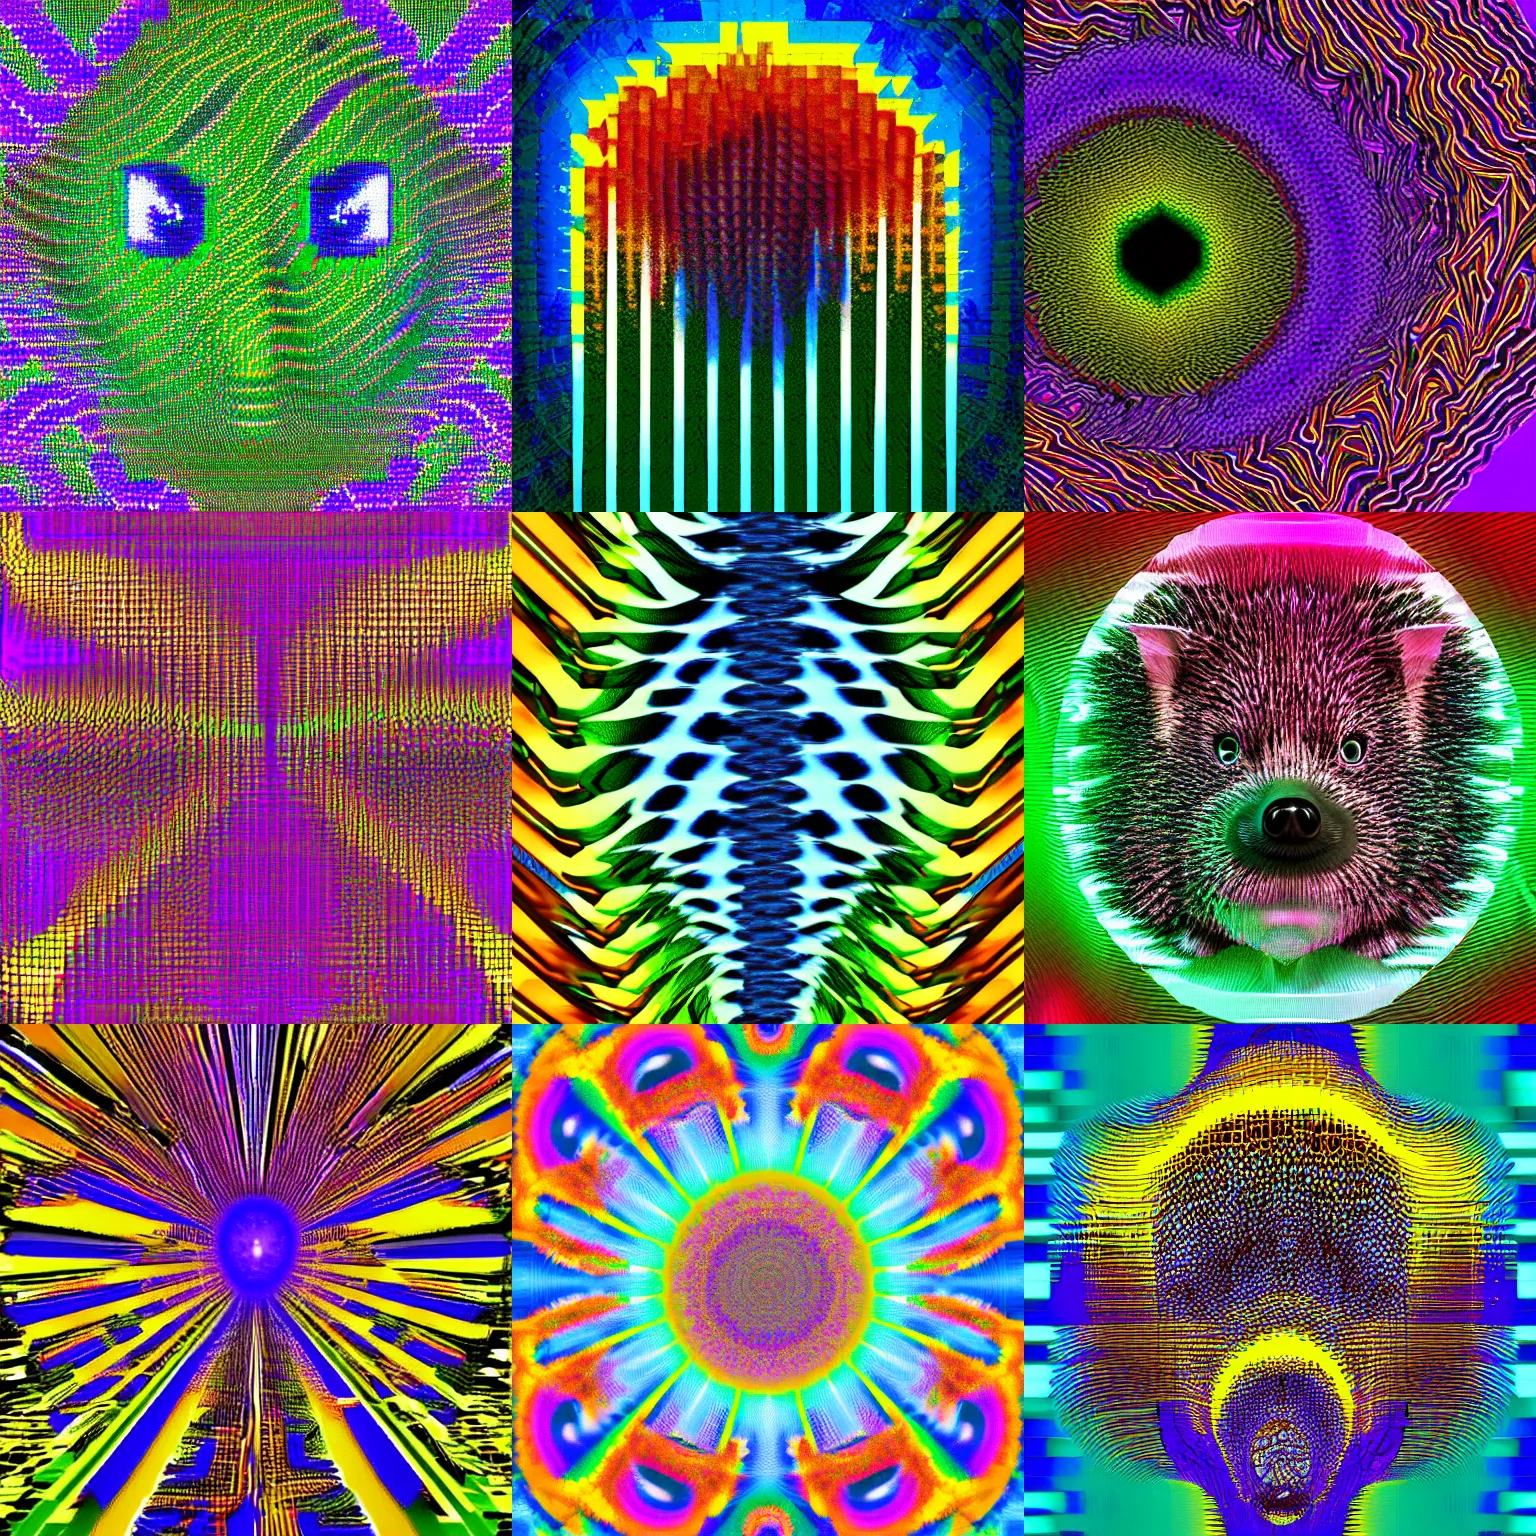 Prompt: datamosh sonic hedgehog portrait glitch art datamosh